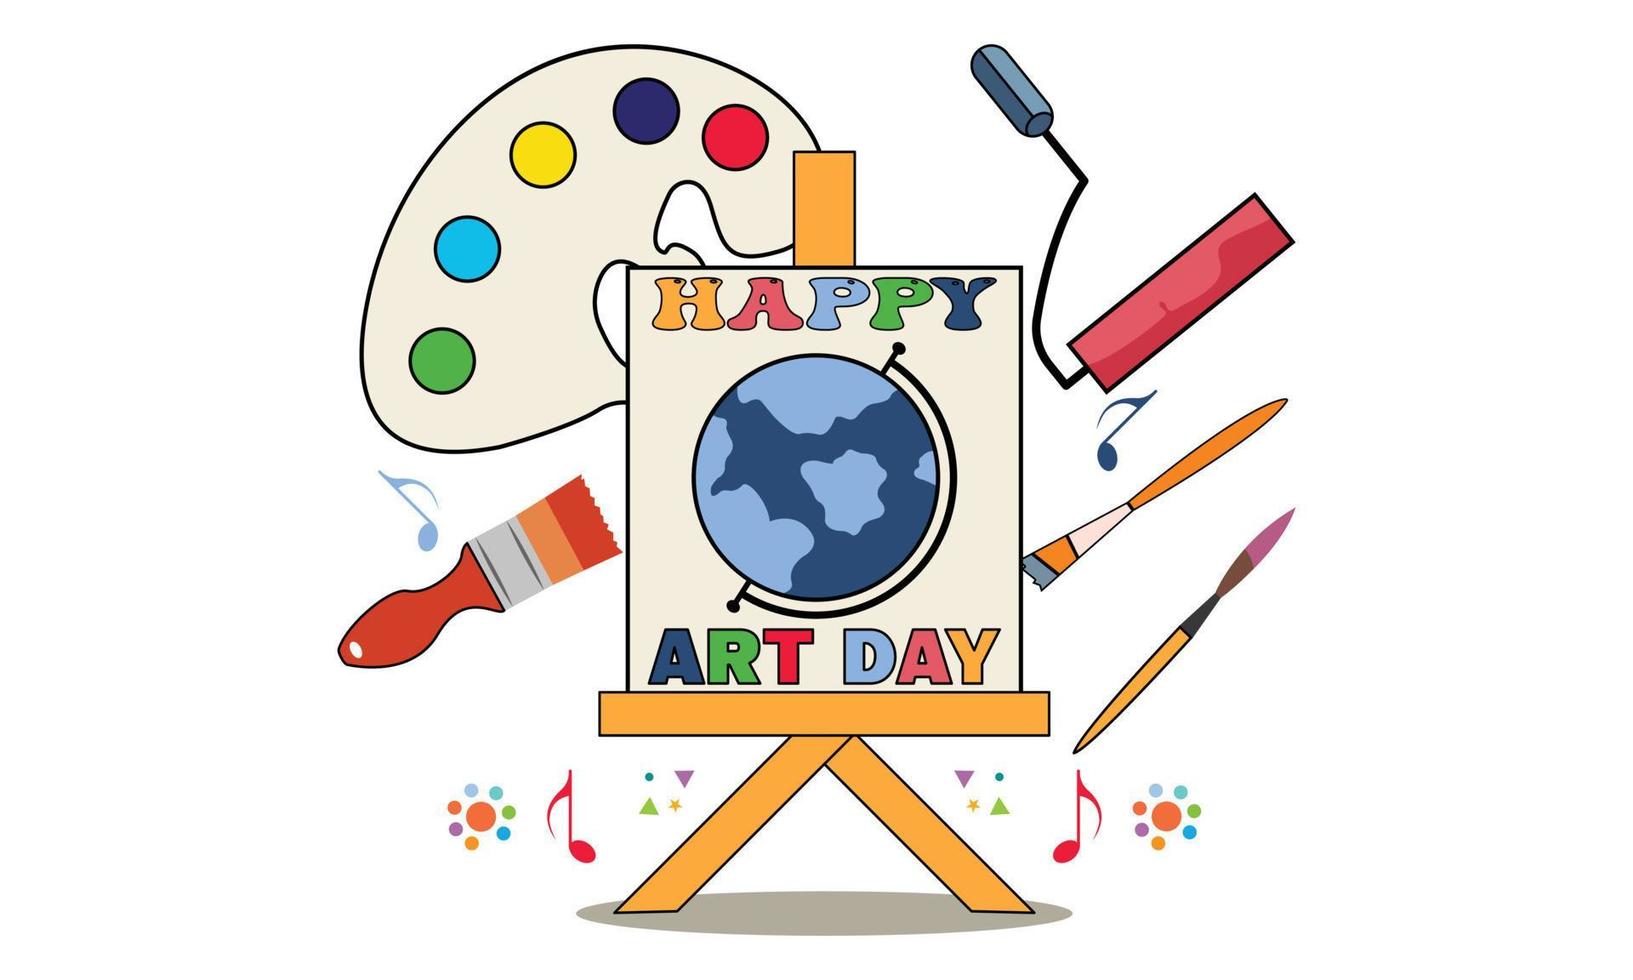 Flat world art day Vector and illustration Background Design, International artists day banner design,